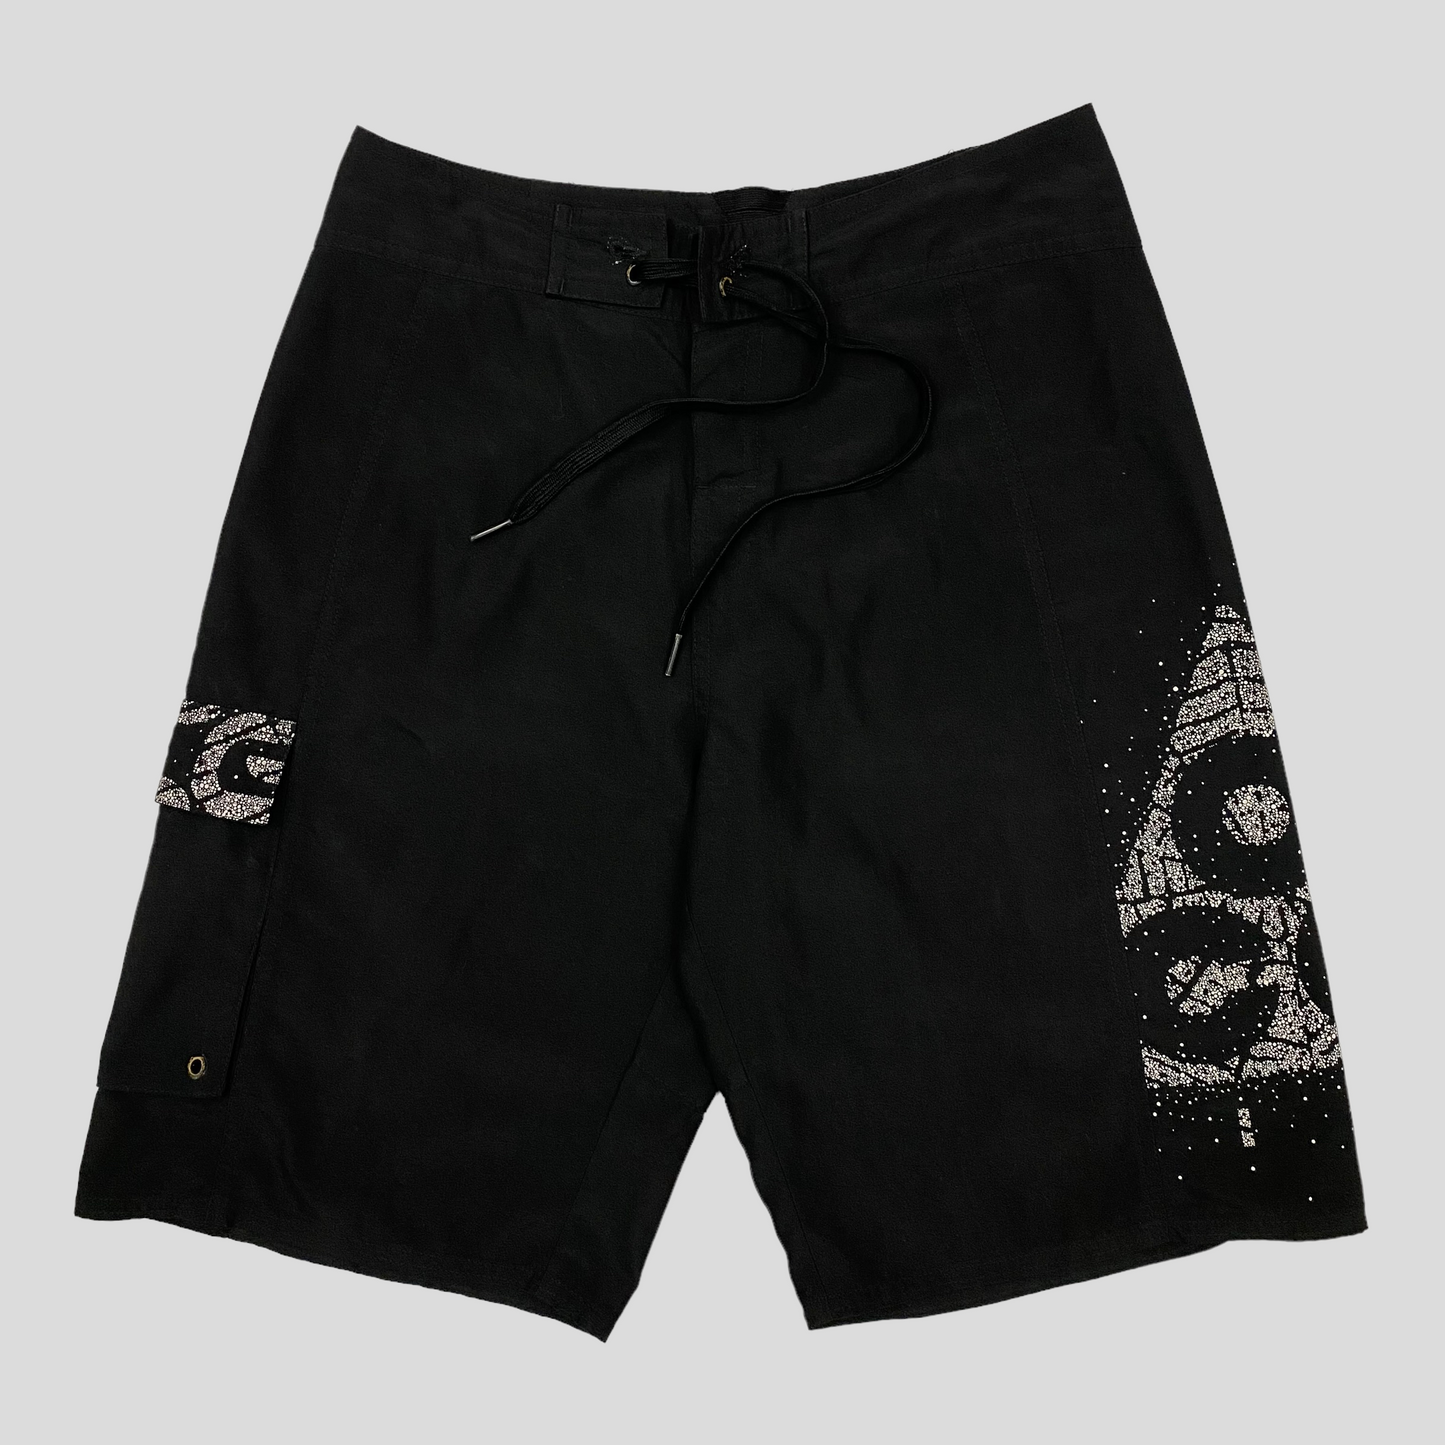 Nike ACG ‘08 Pixel Graphic Shorts - W30